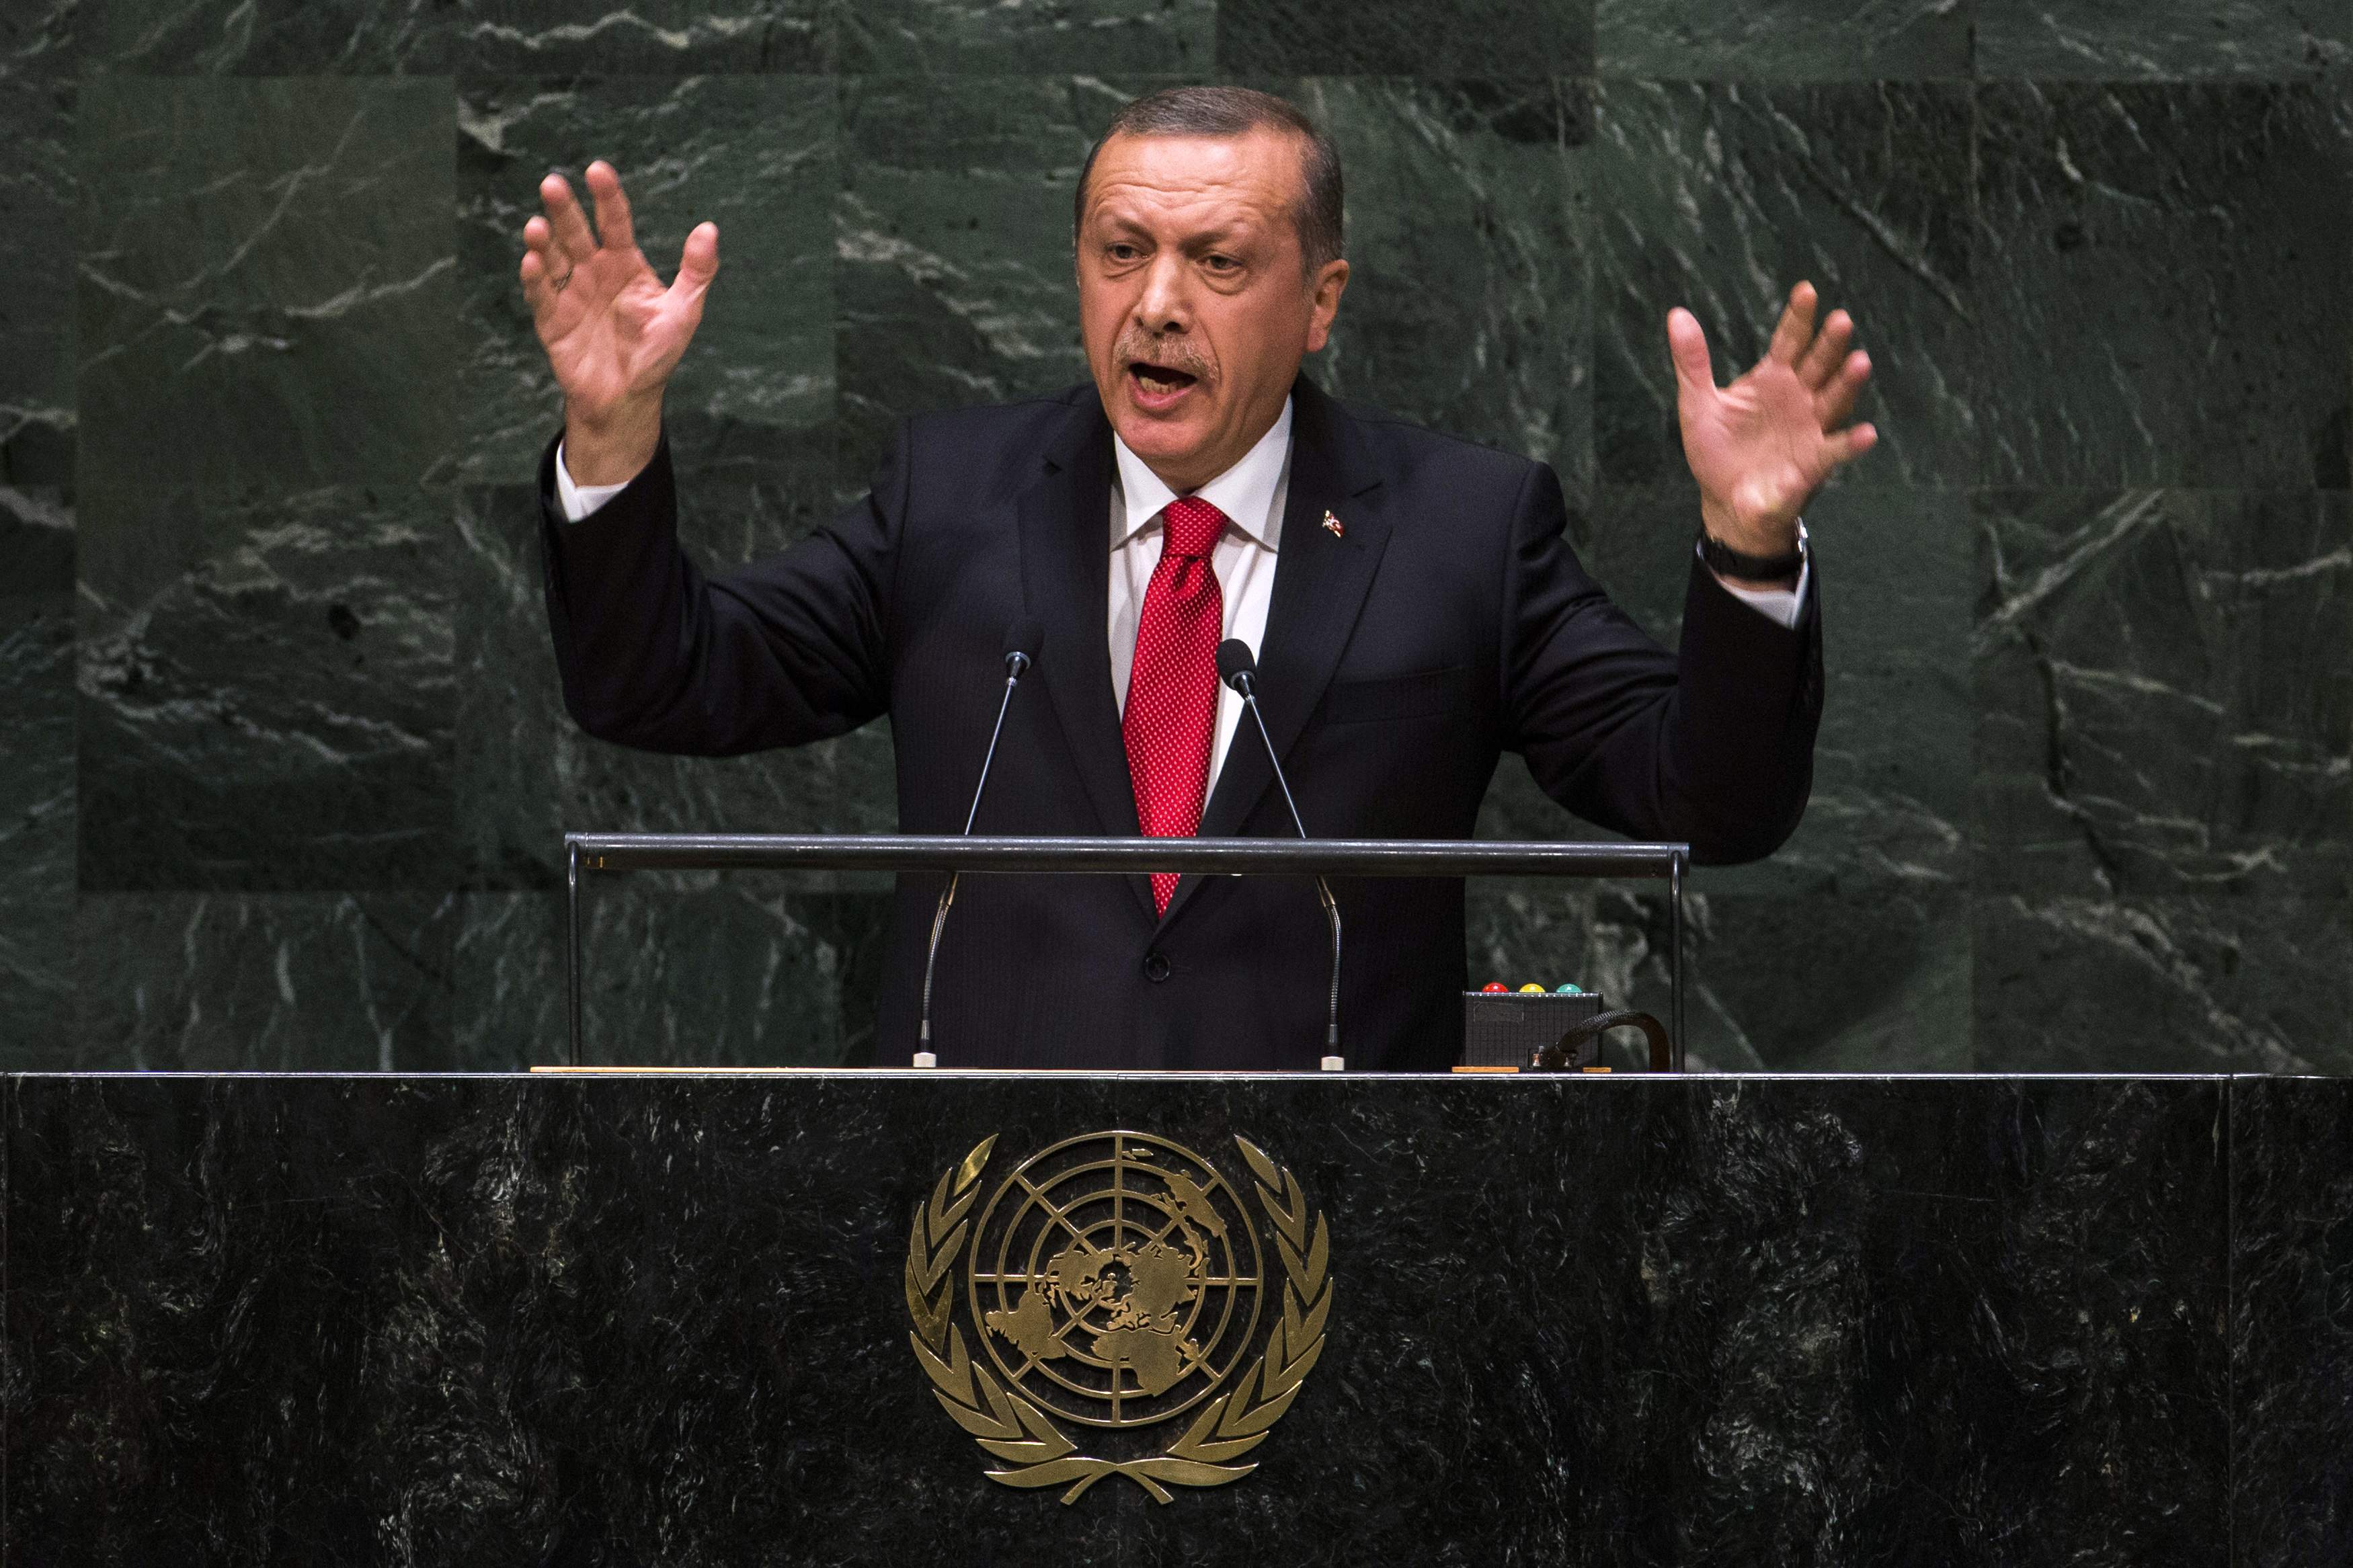 Egypt considers Edrogan's UN speech meddling in its affairs